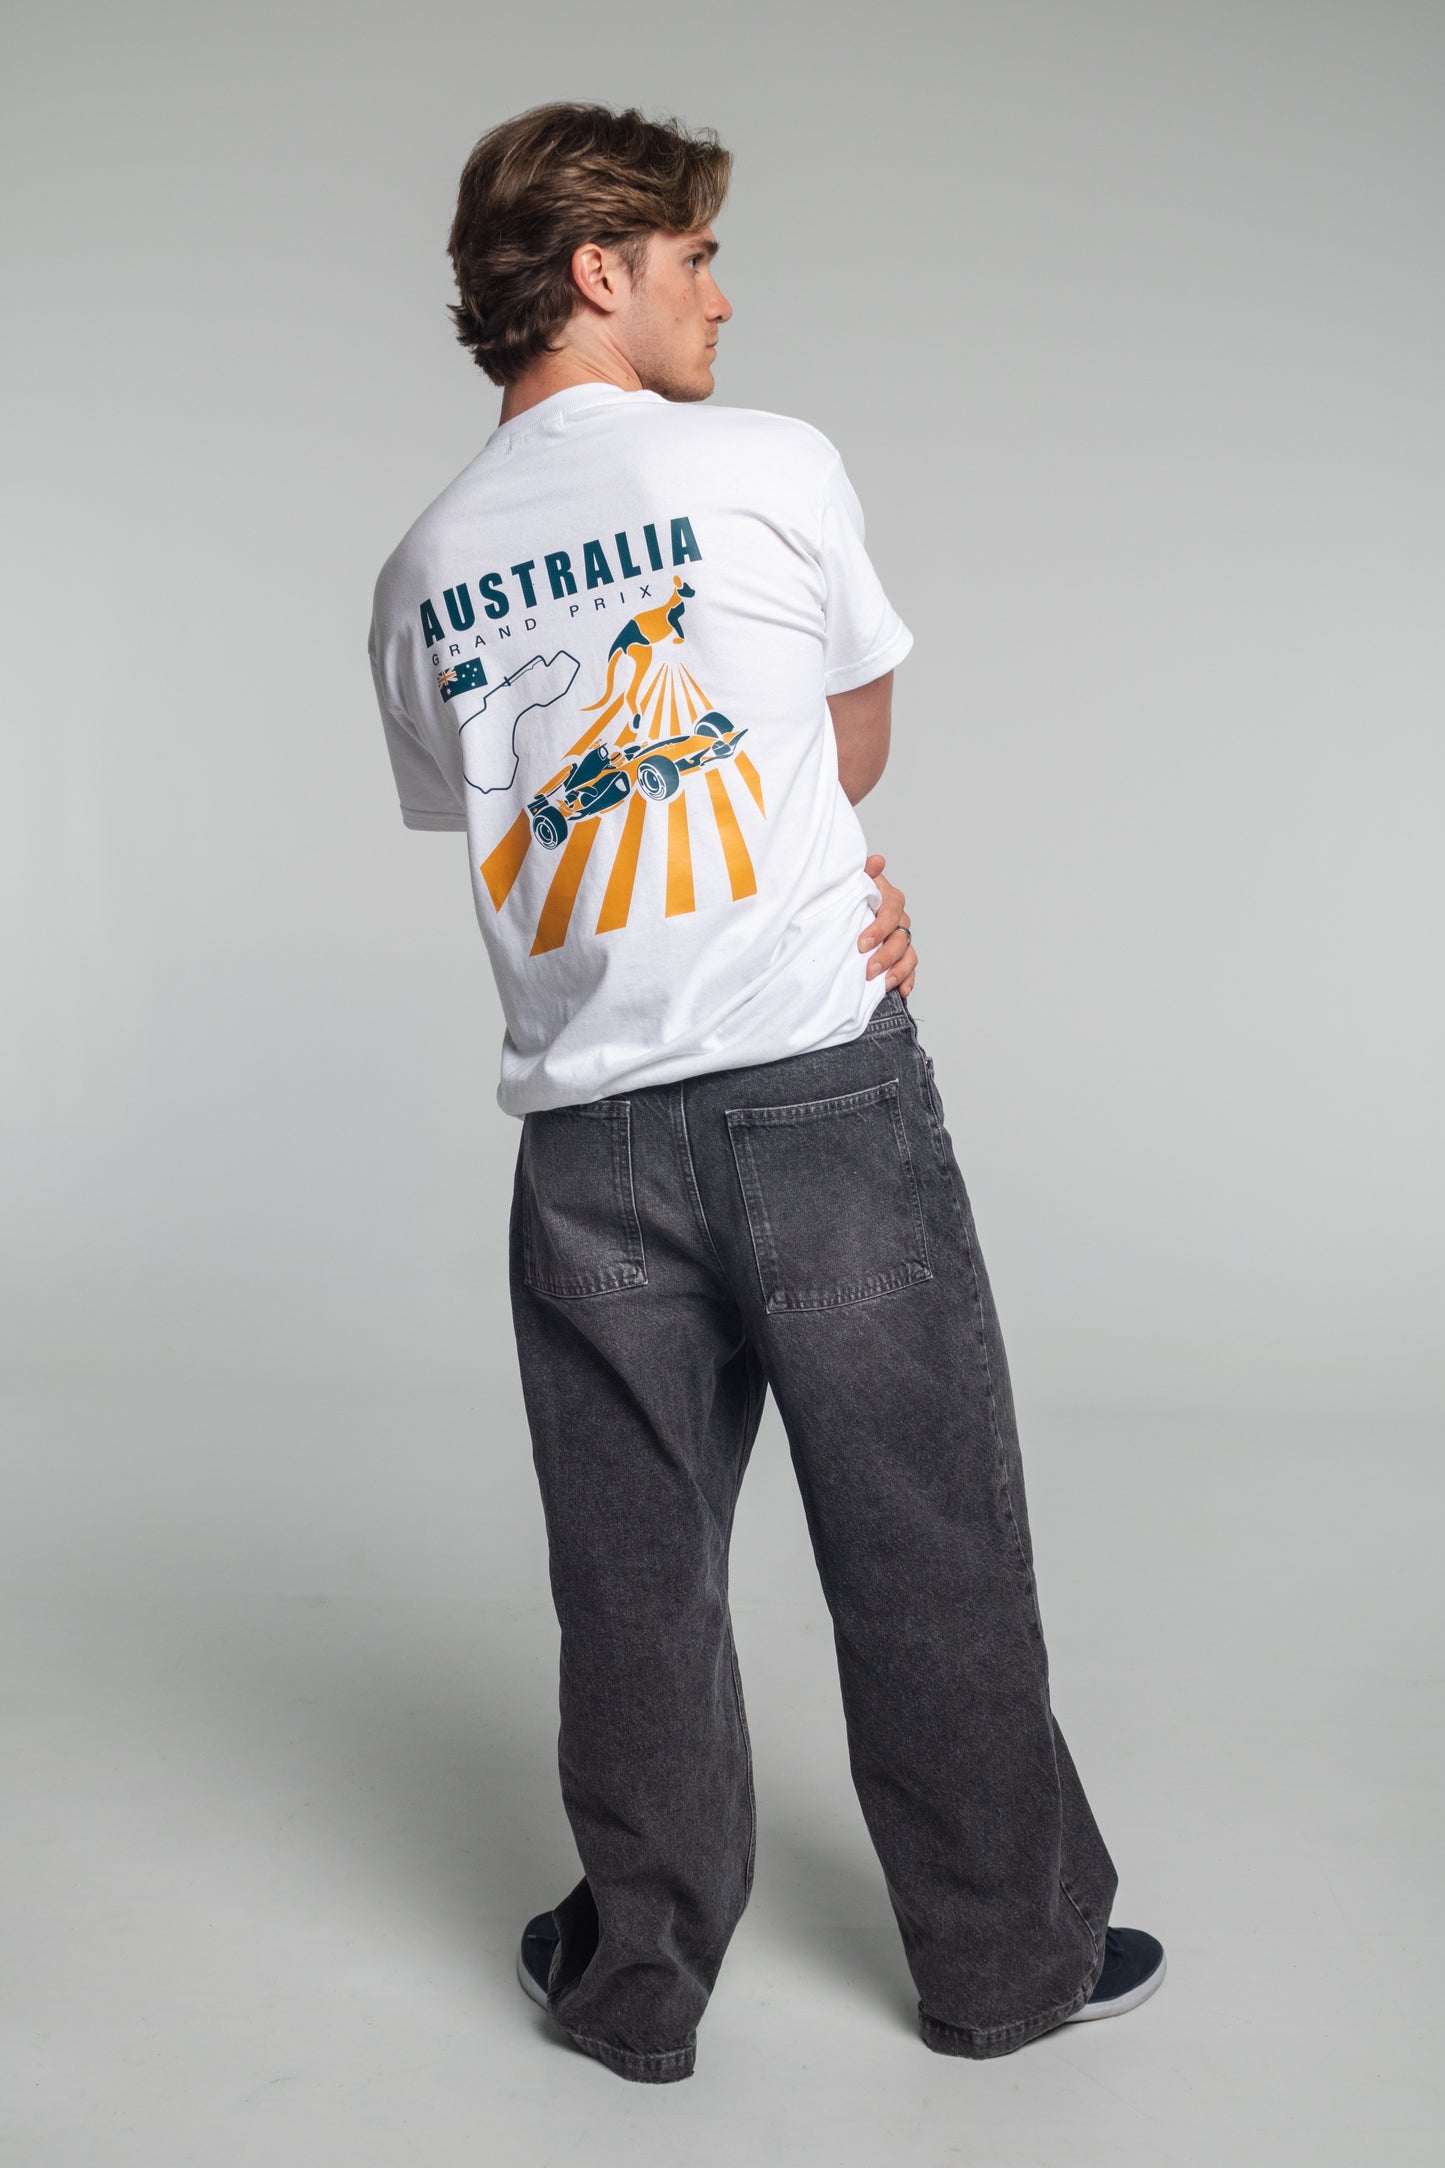 "Australia GP" Formula 1 T-shirt